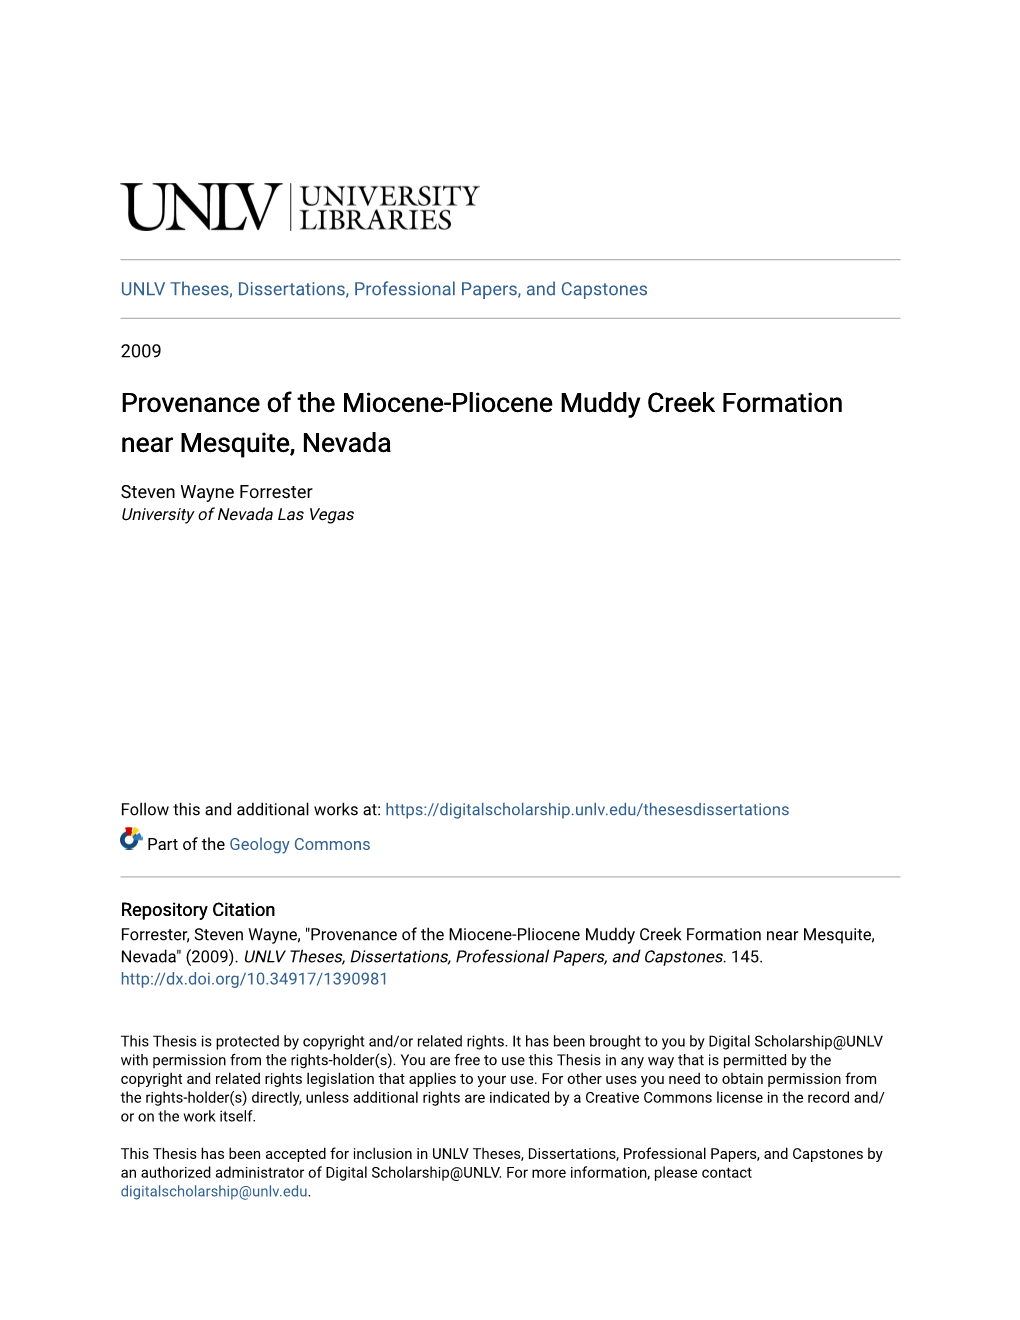 Provenance of the Miocene-Pliocene Muddy Creek Formation Near Mesquite, Nevada